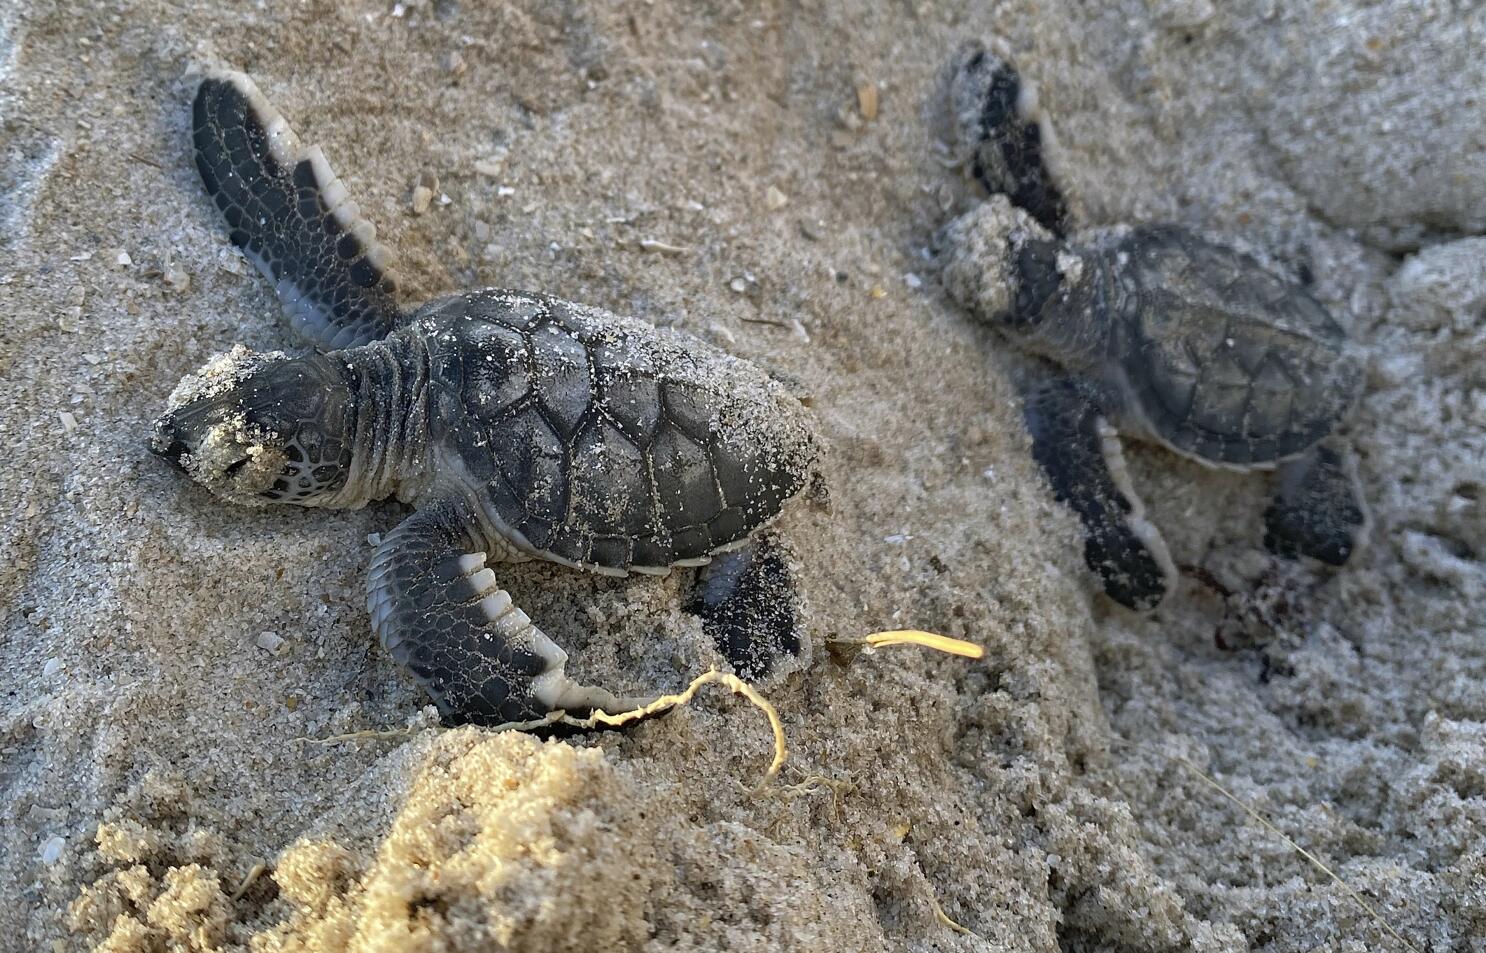 Tortoiseshell: Too Rare to Wear — The State of the World's Sea Turtles